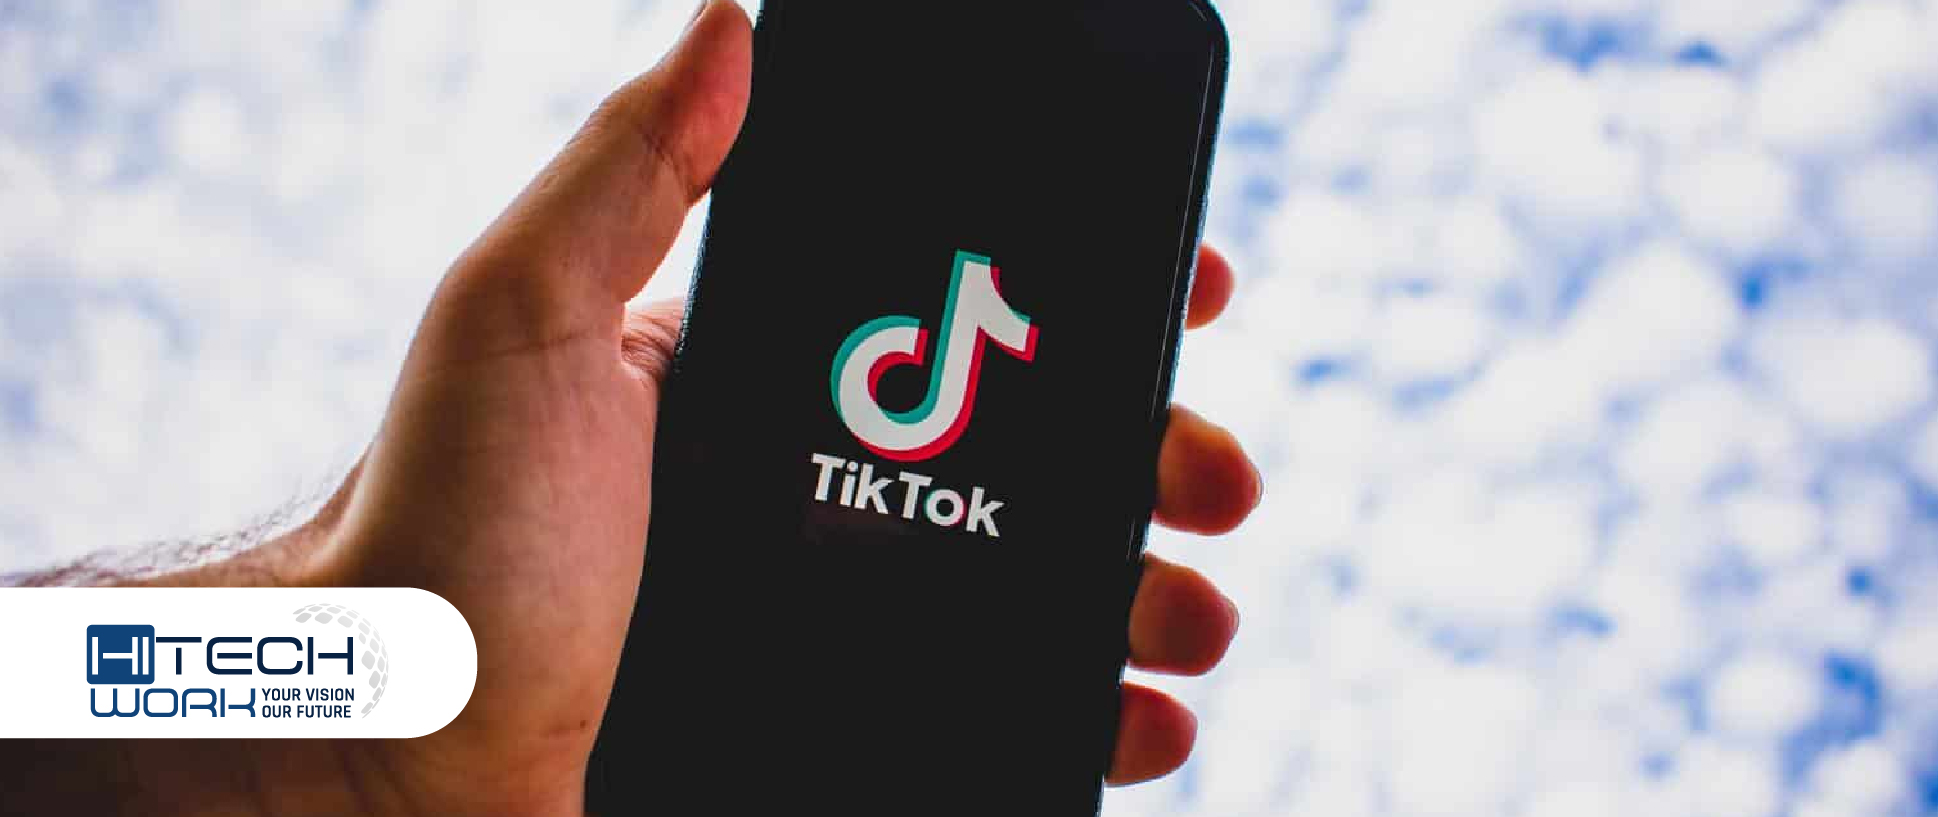 What is Tiktok